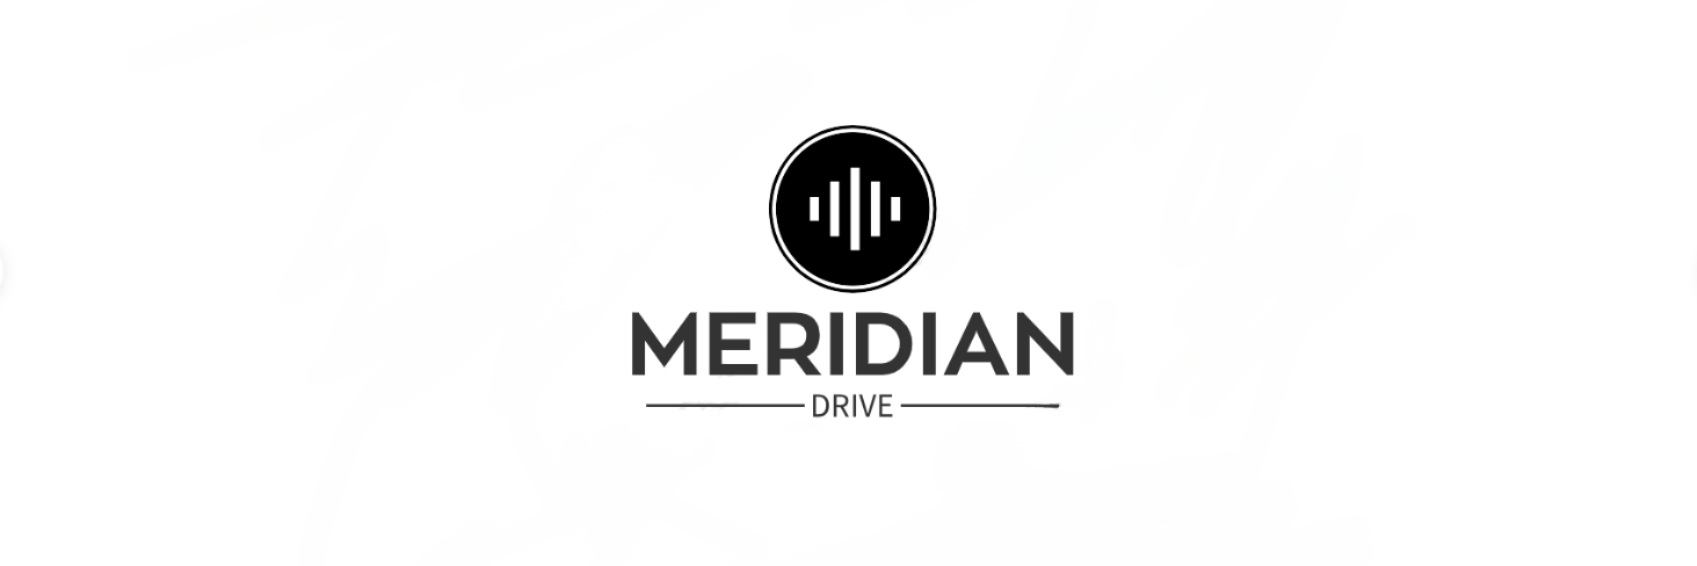 Meridian Drive